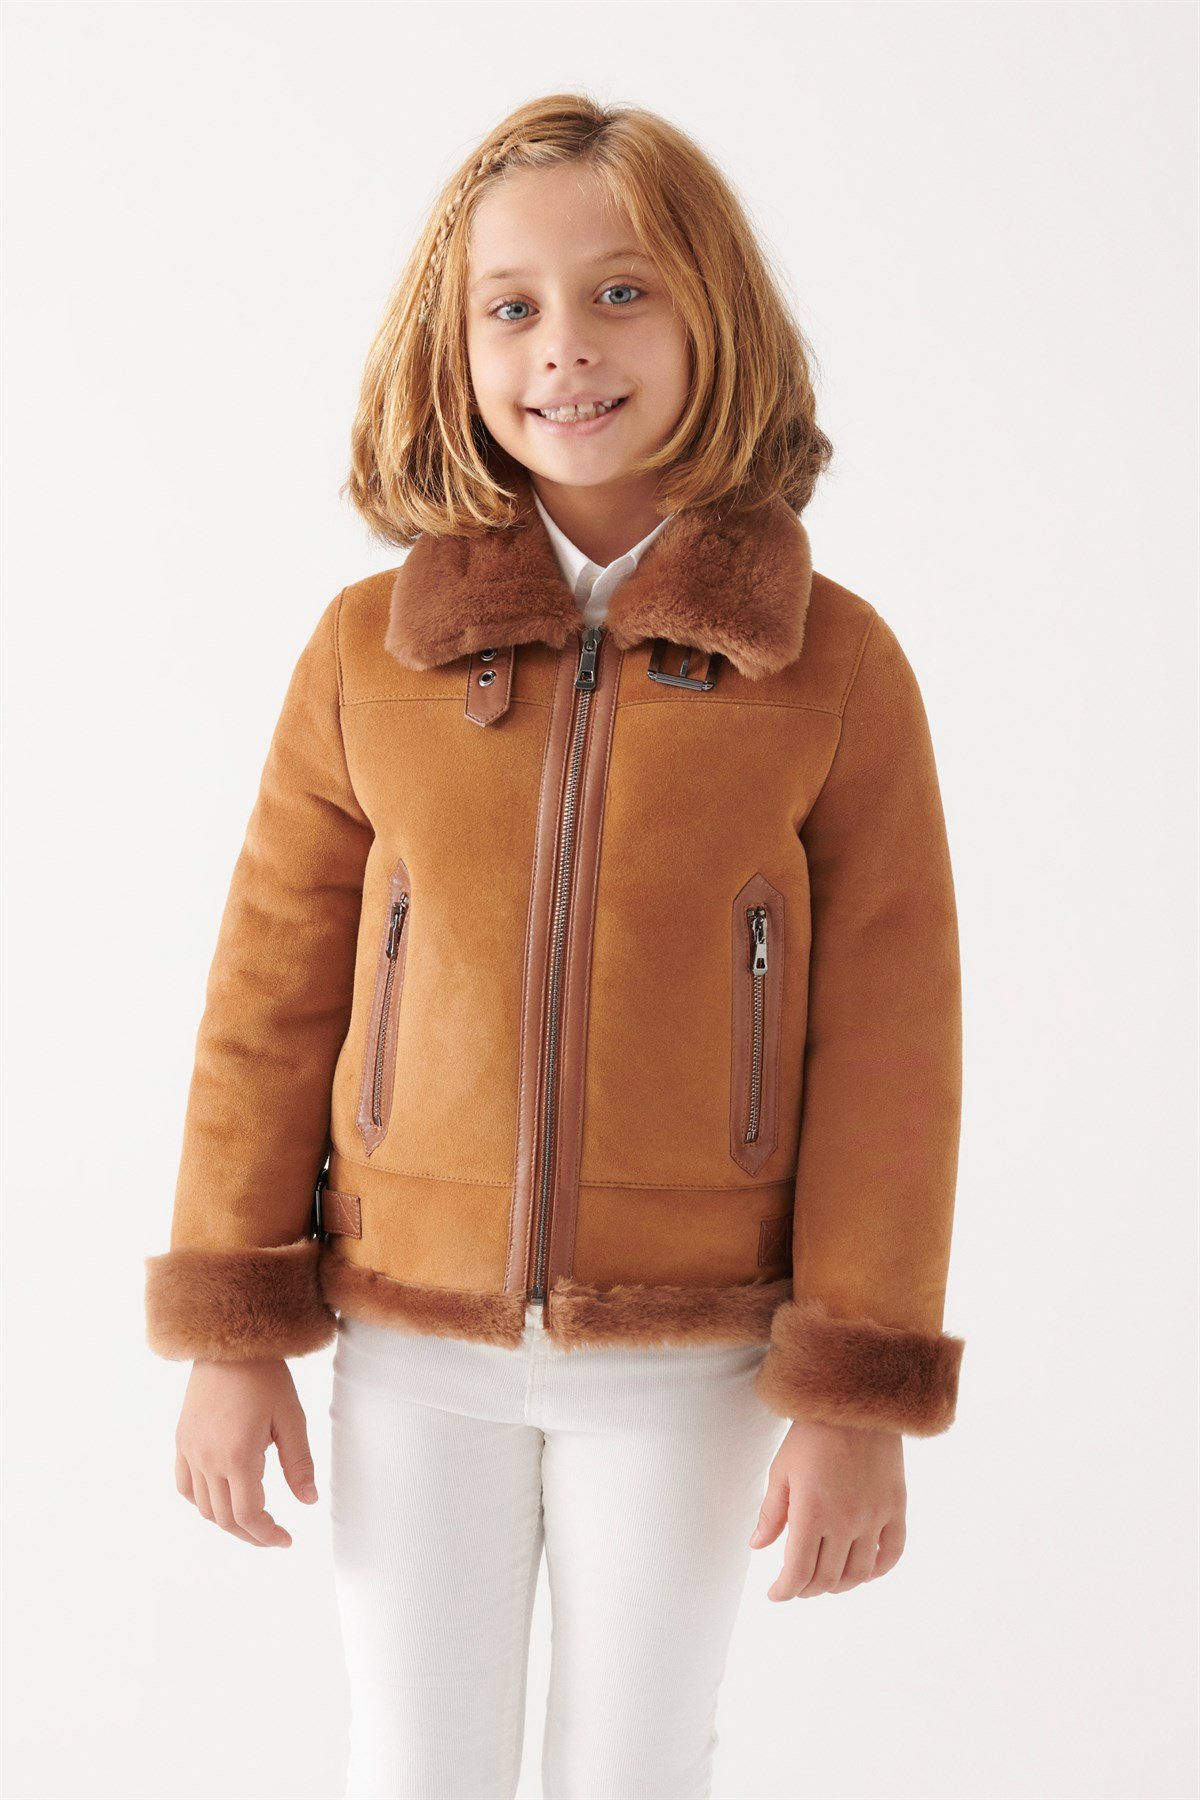 DAFFY Girls Tan Shearling Jacket | Girls Leather and Shearling Jacket & Coat